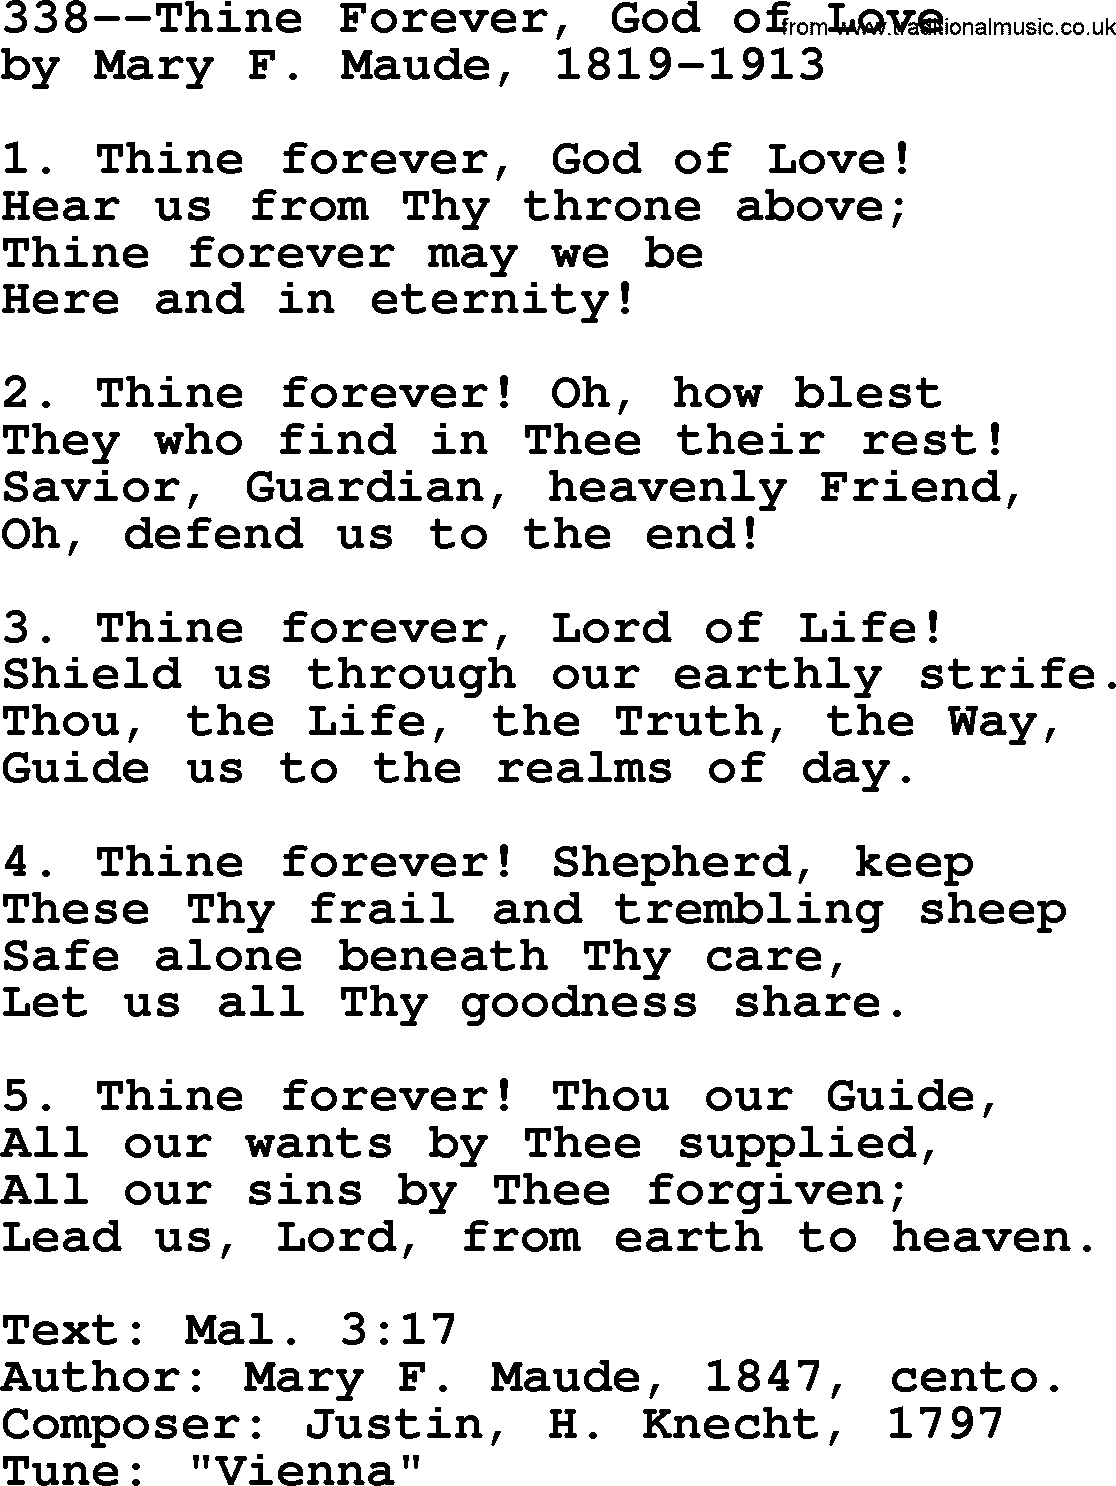 Lutheran Hymn: 338--Thine Forever, God of Love.txt lyrics with PDF